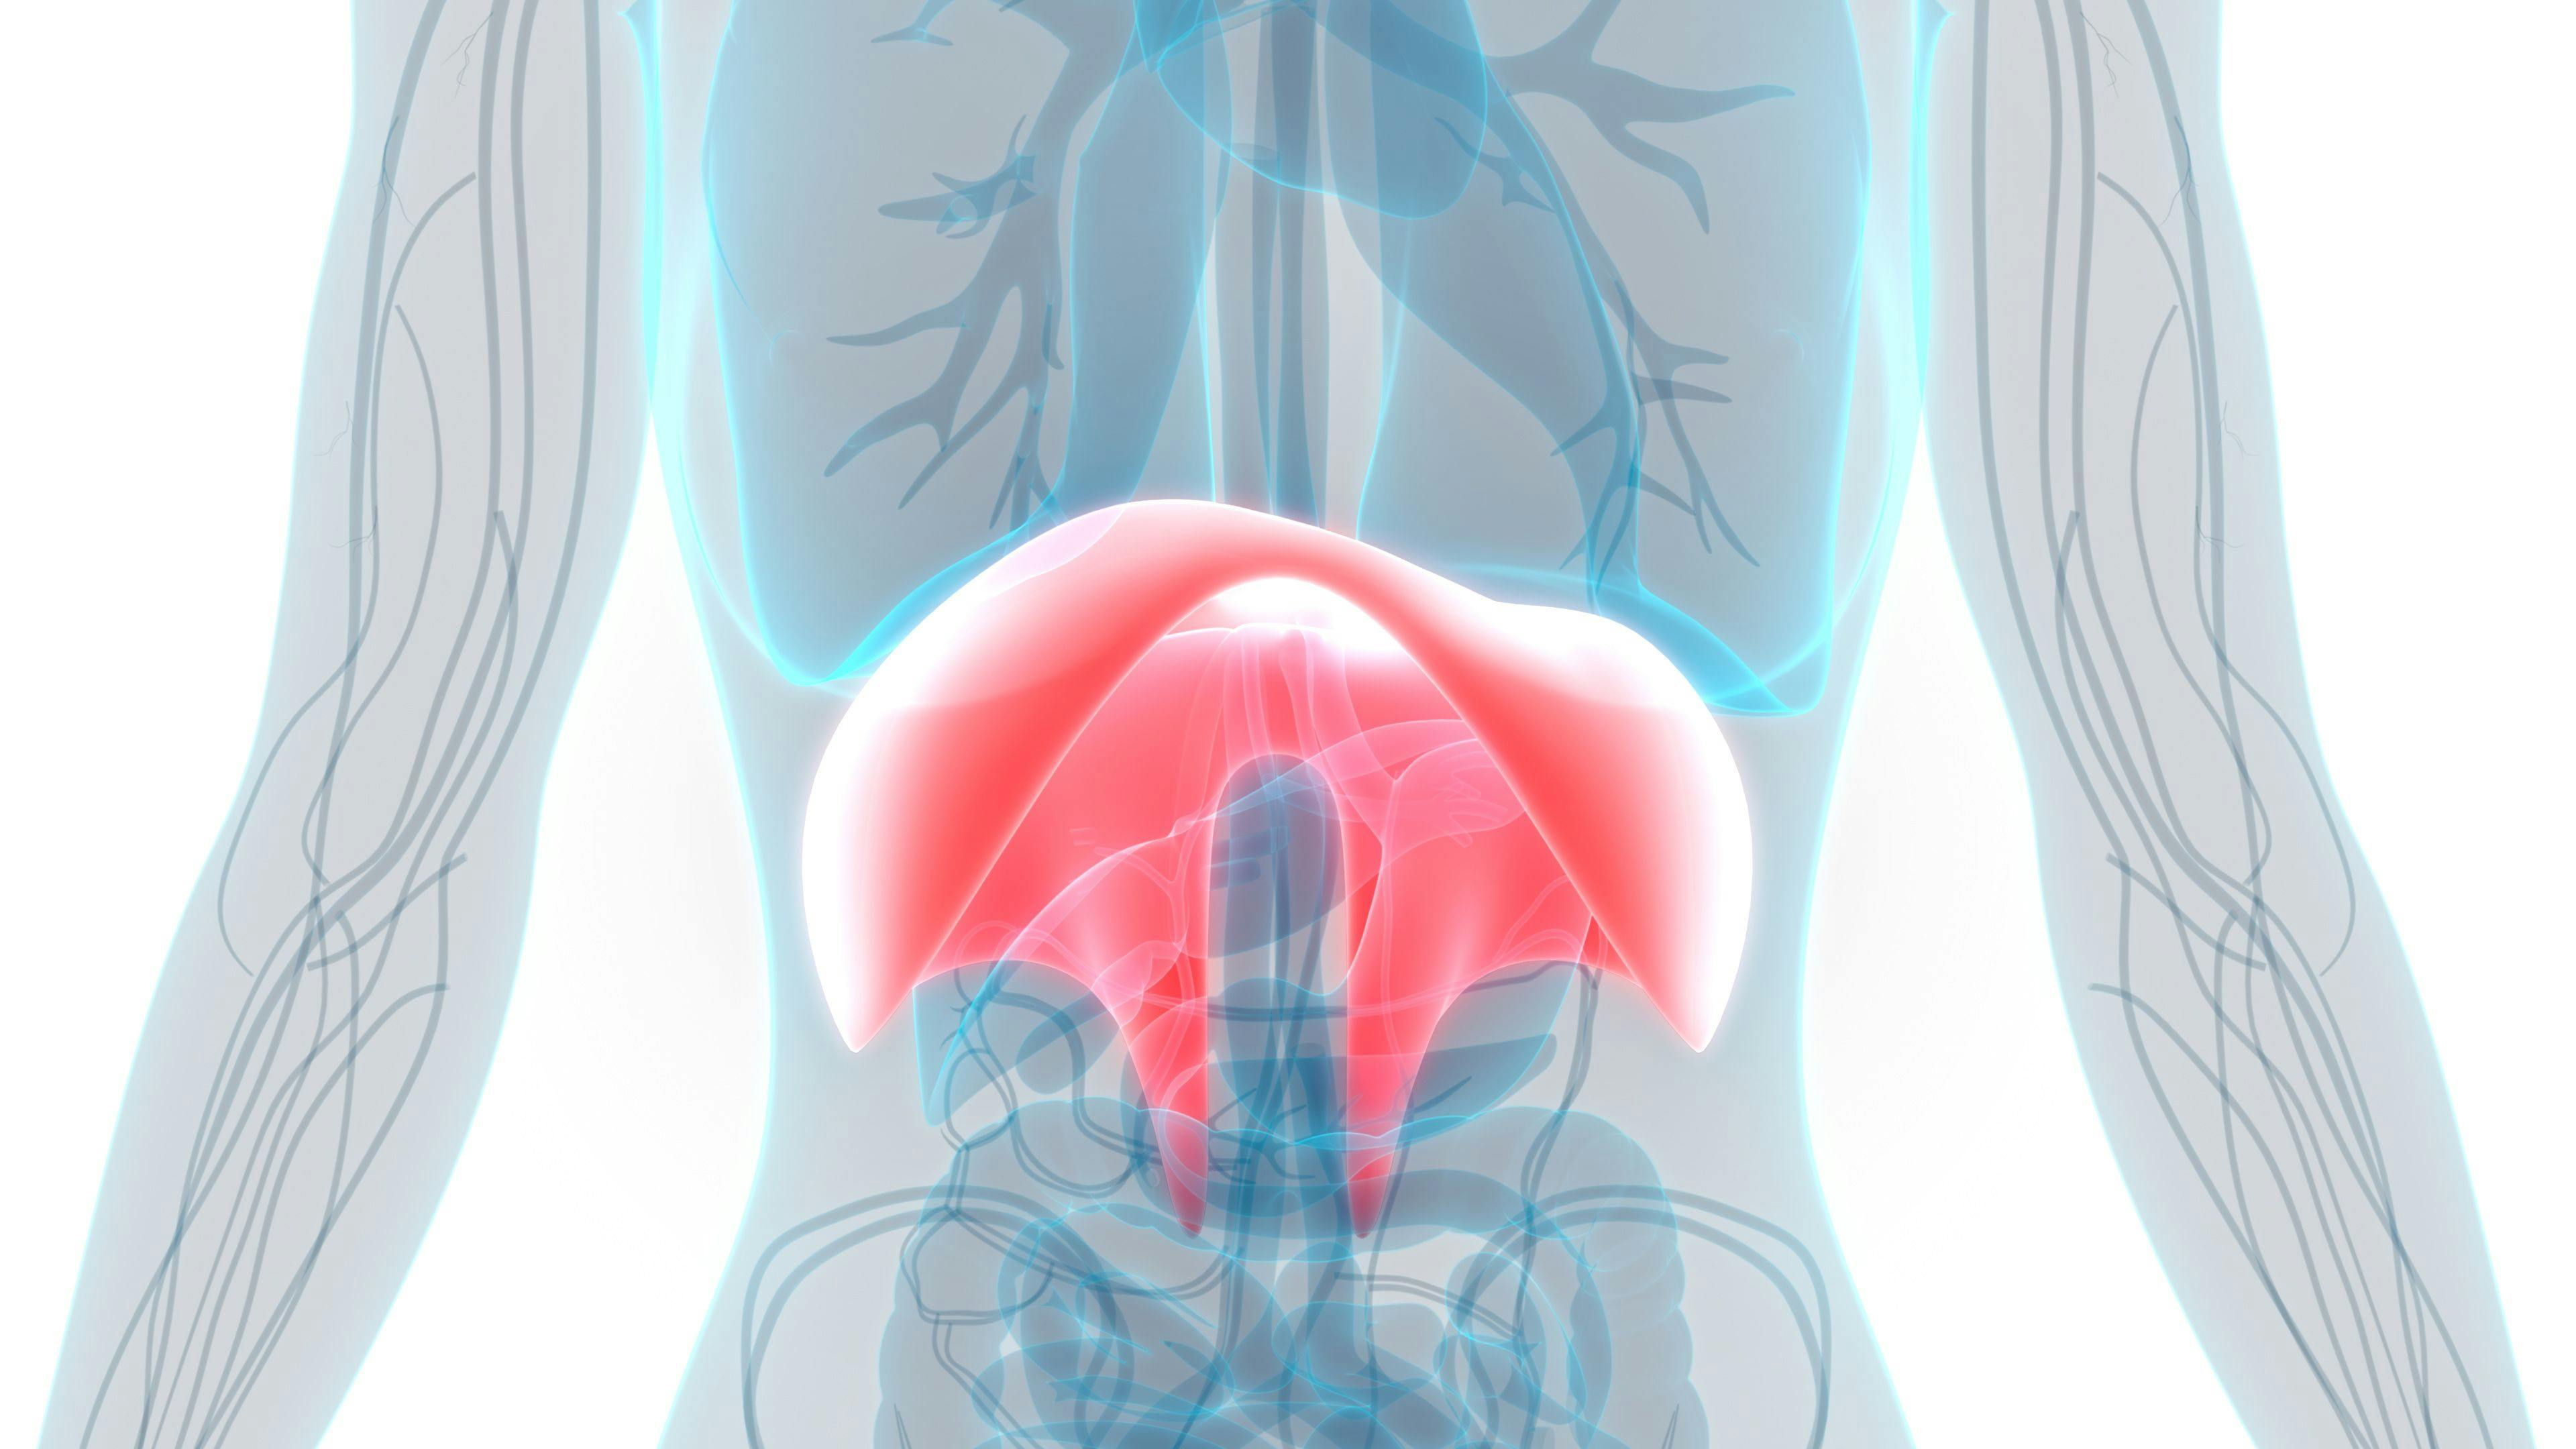 Human Diaphragm | Image credit: magicmine - stock.adobe.com